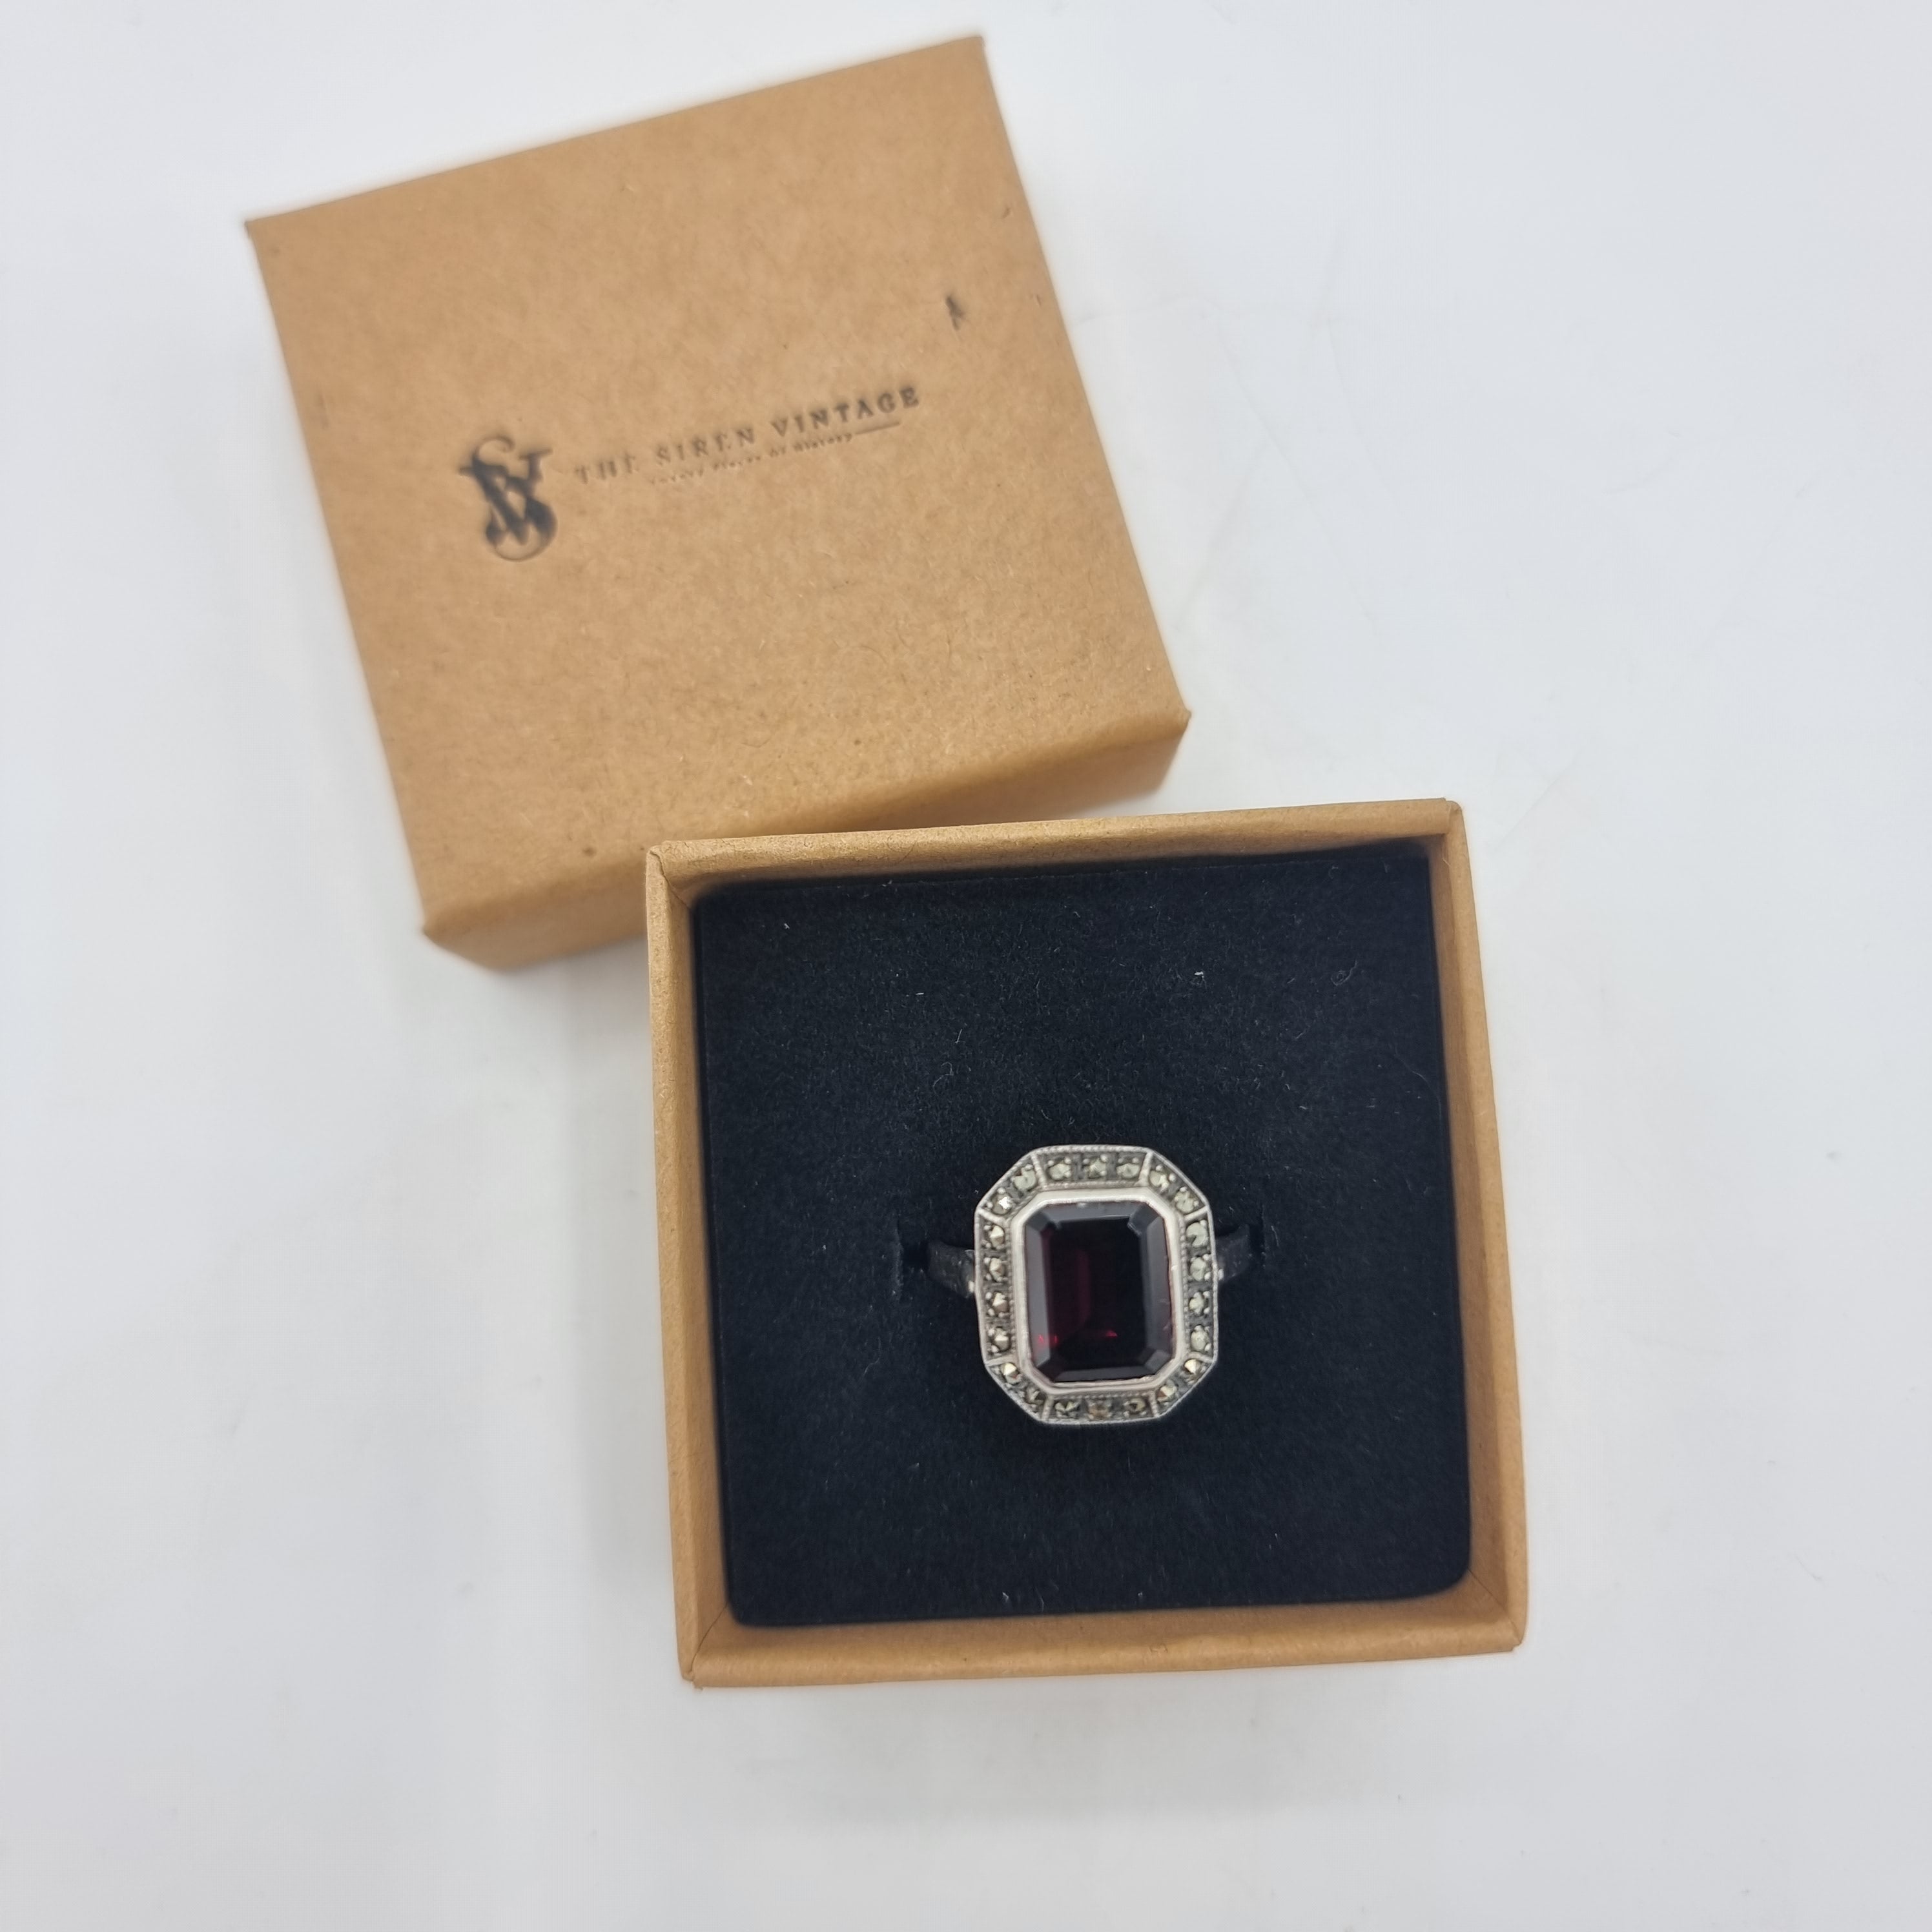 1930s silver ring - Maracasite deco jewellery - Red garnet